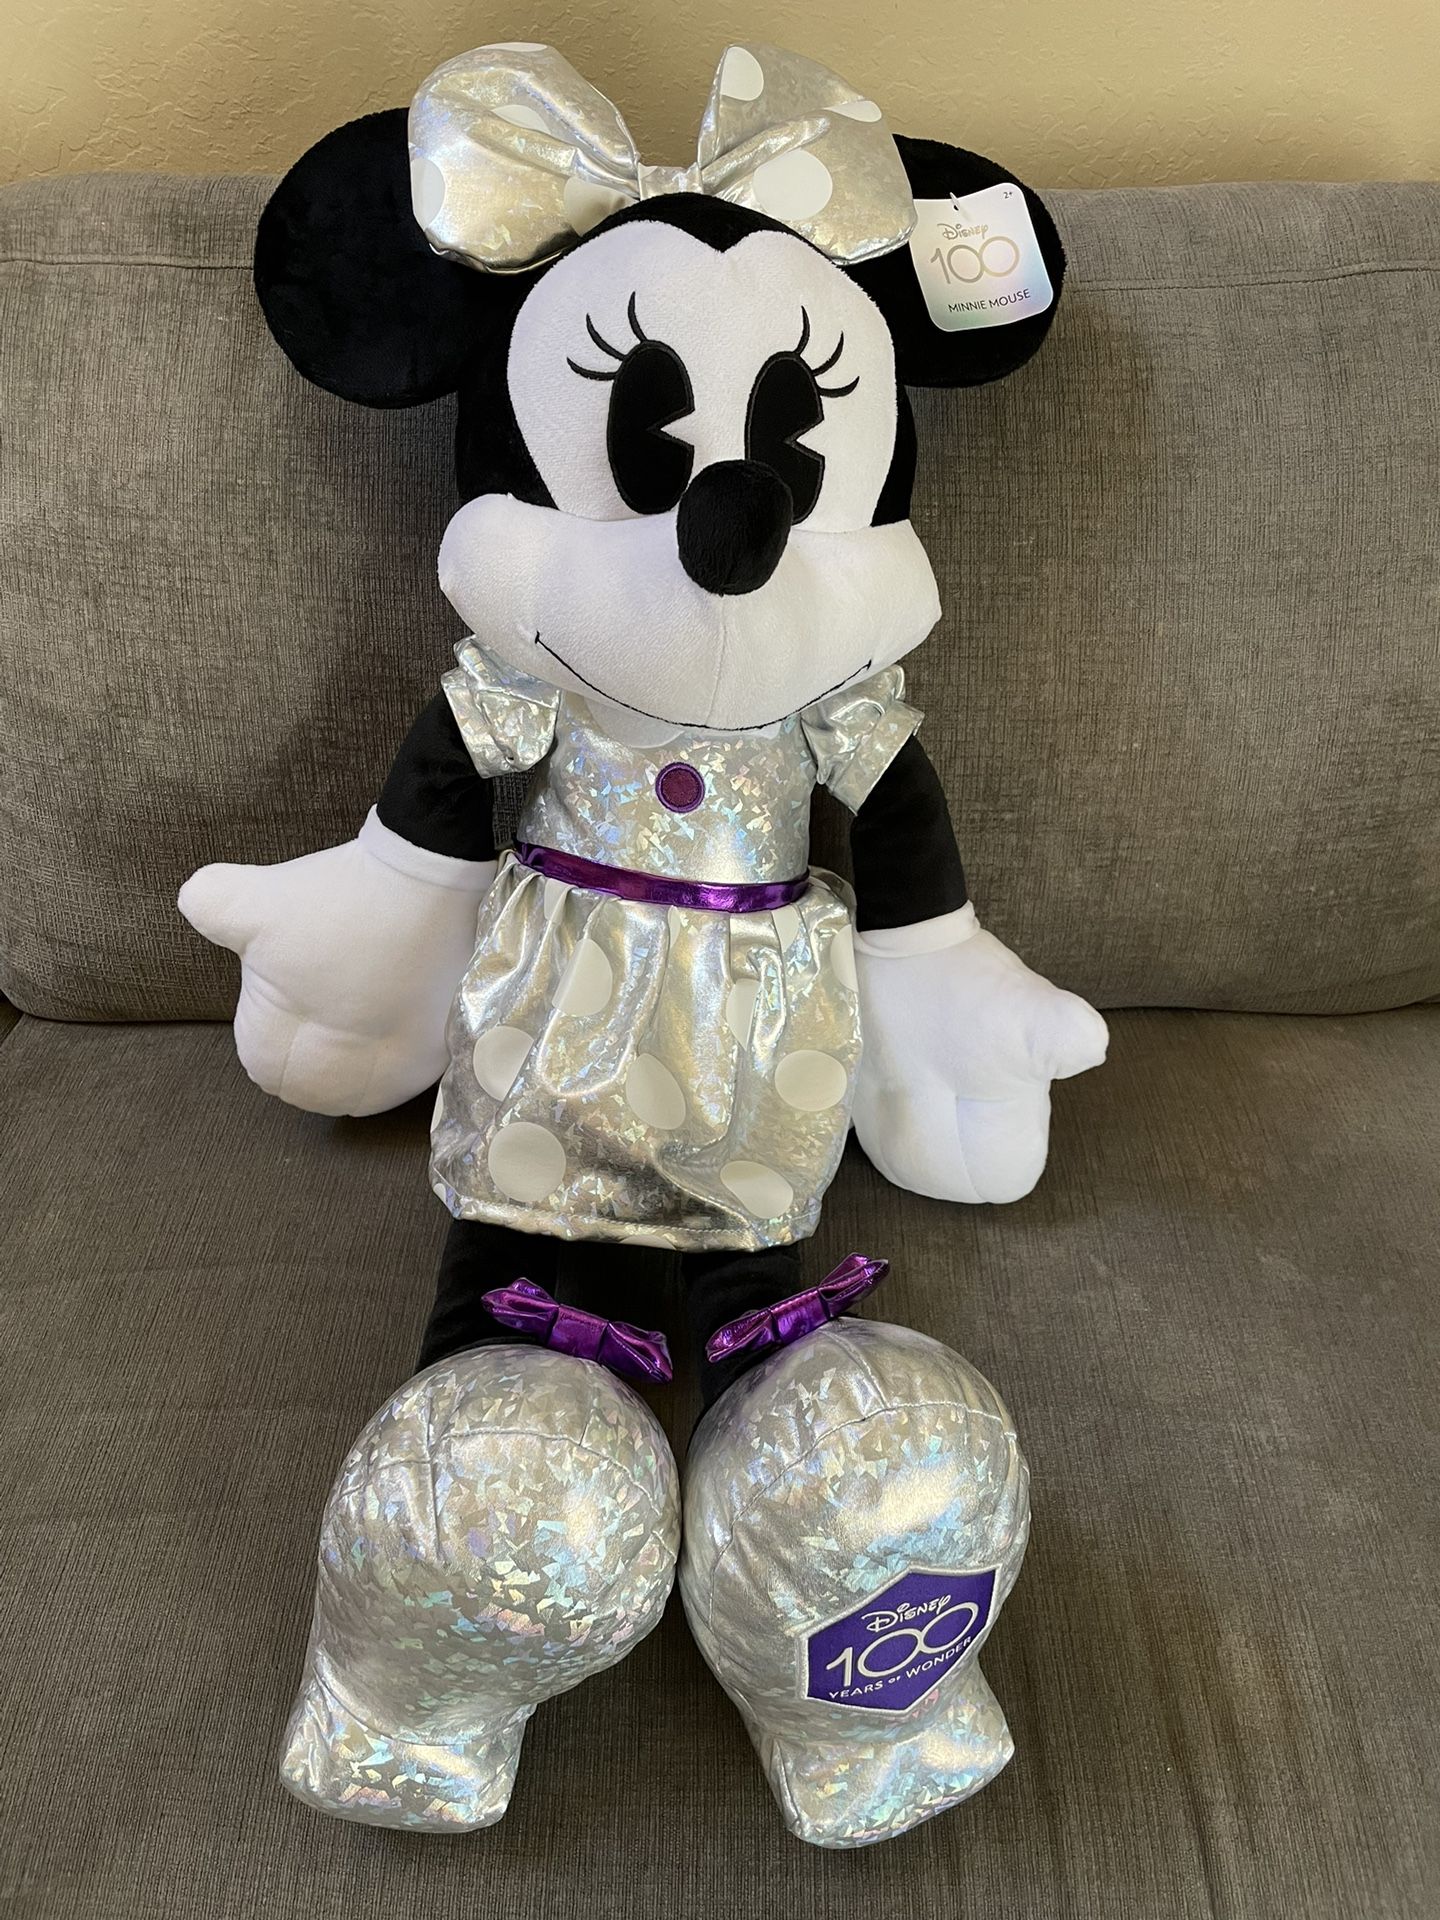 rand New Jumbo Disney 100 Minnie Mouse Plush 31”